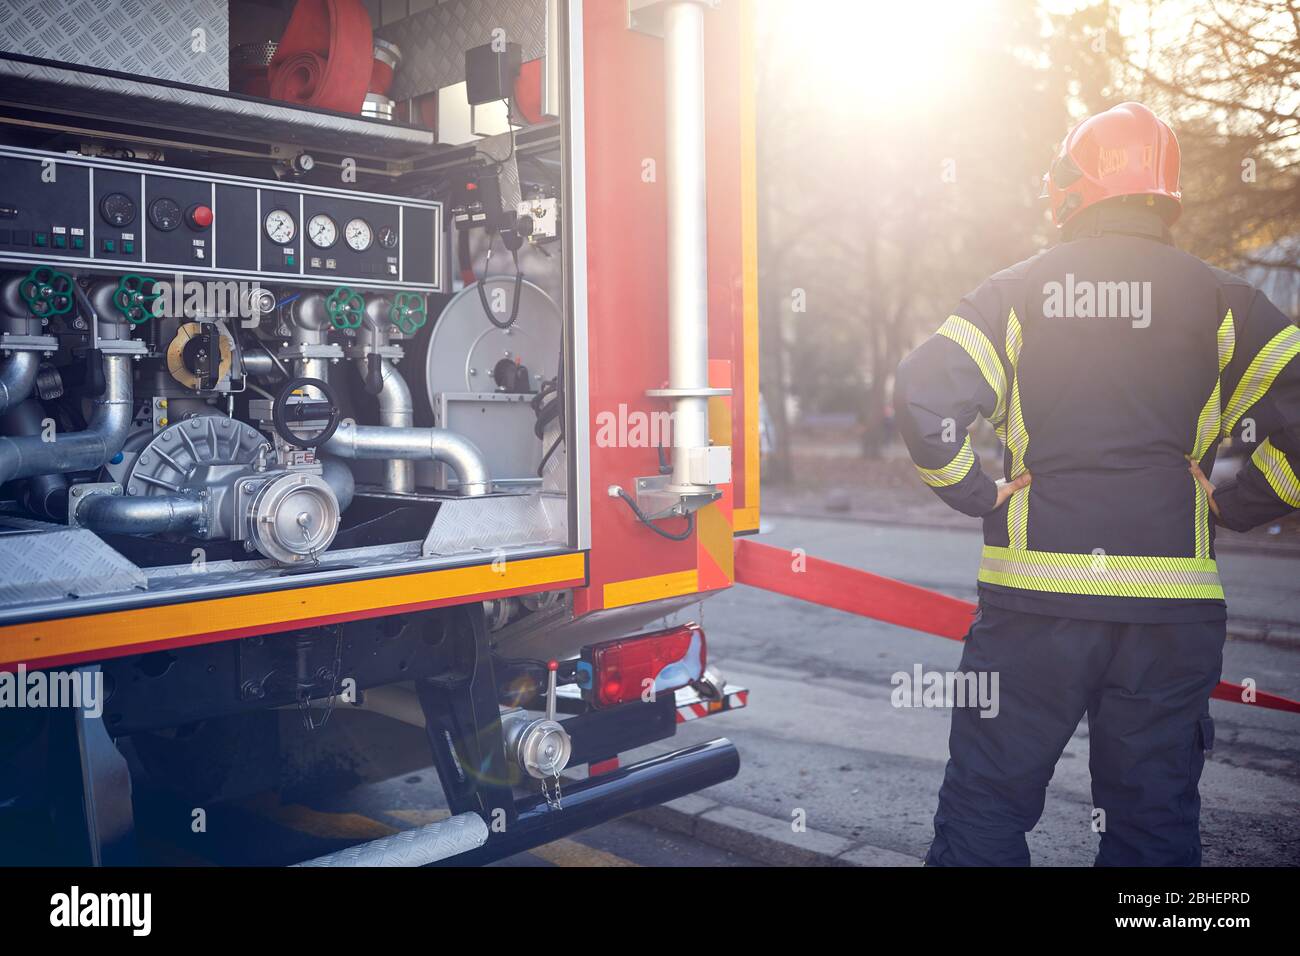 Fireman firefighter in action standing near a fire truck.  Attack, danger,fire. Stock Photo